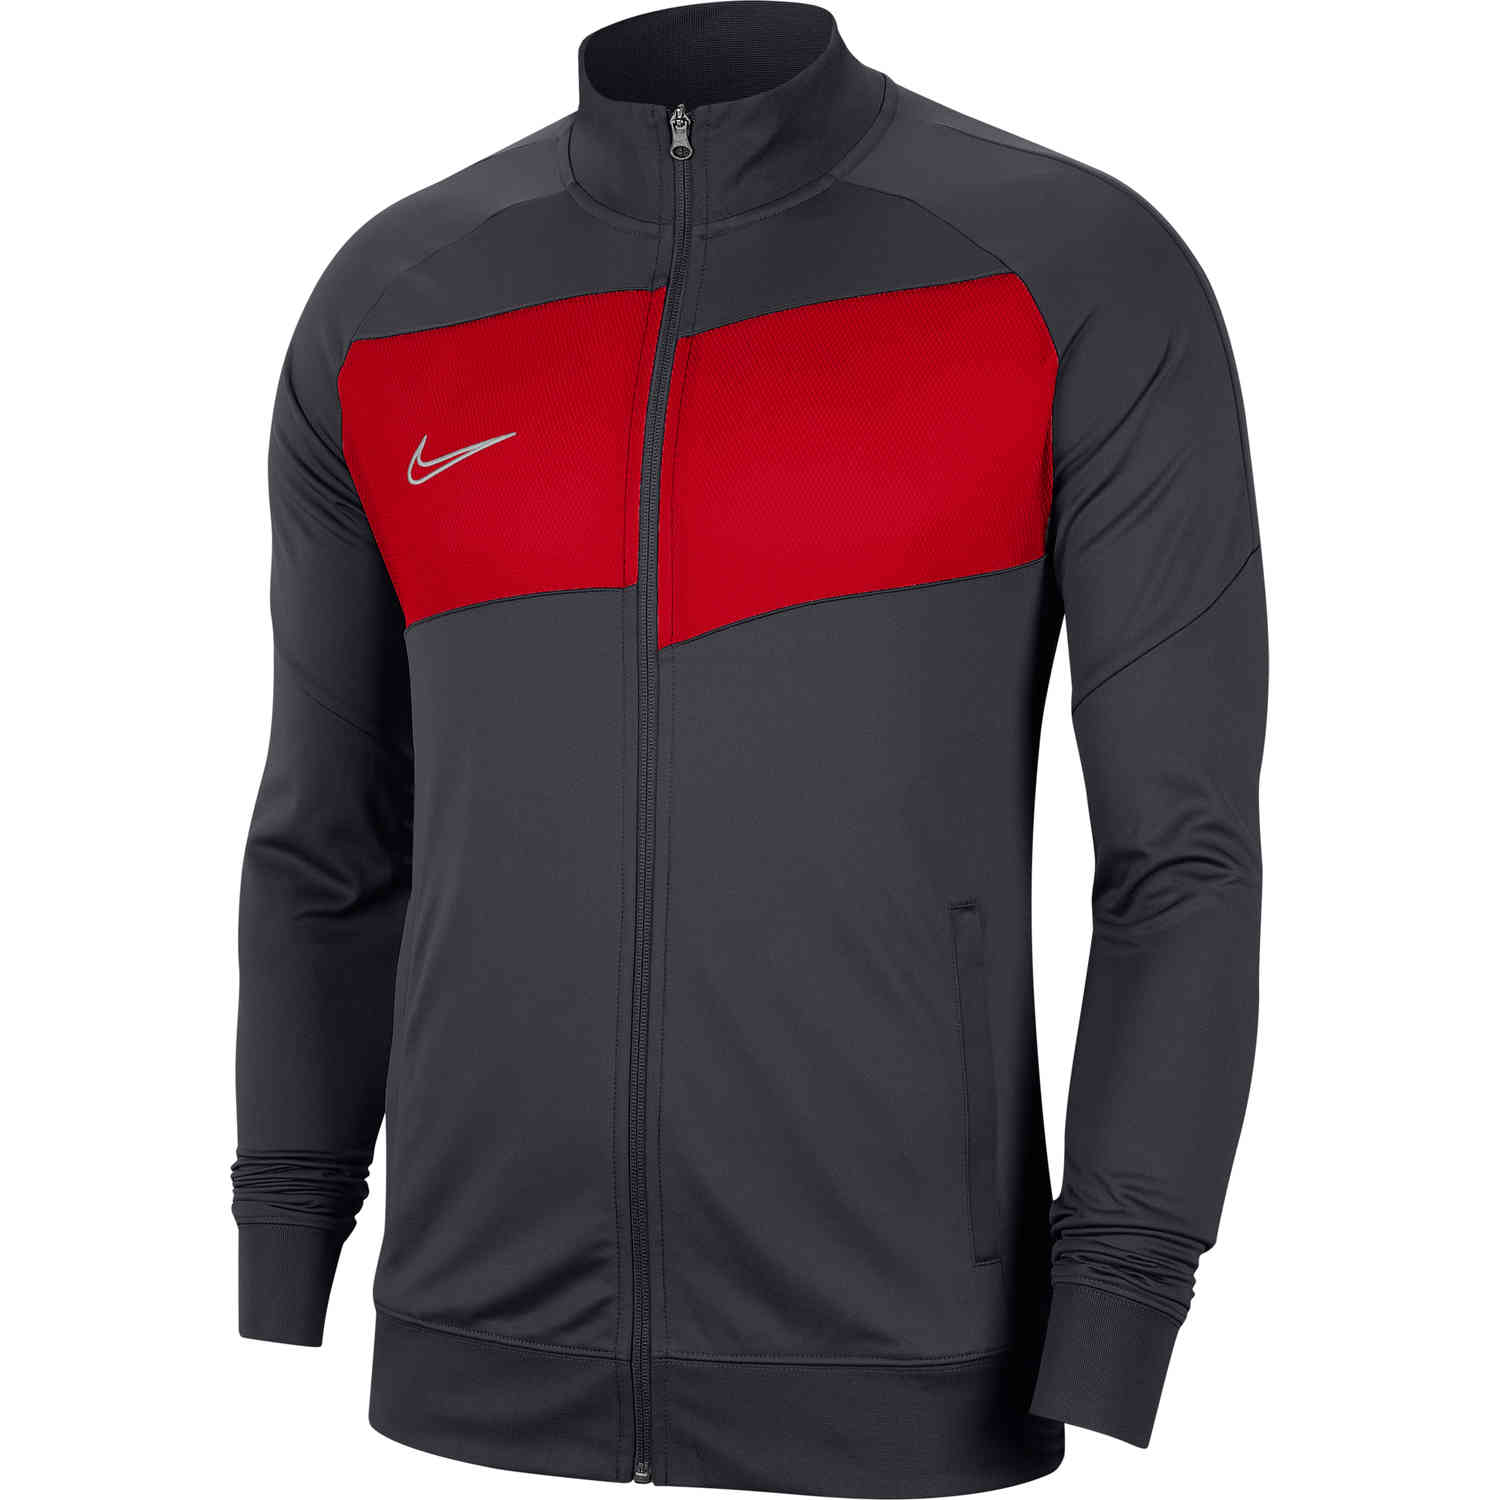 Nike Academy Pro Jacket - Anthracite/University Red - SoccerPro